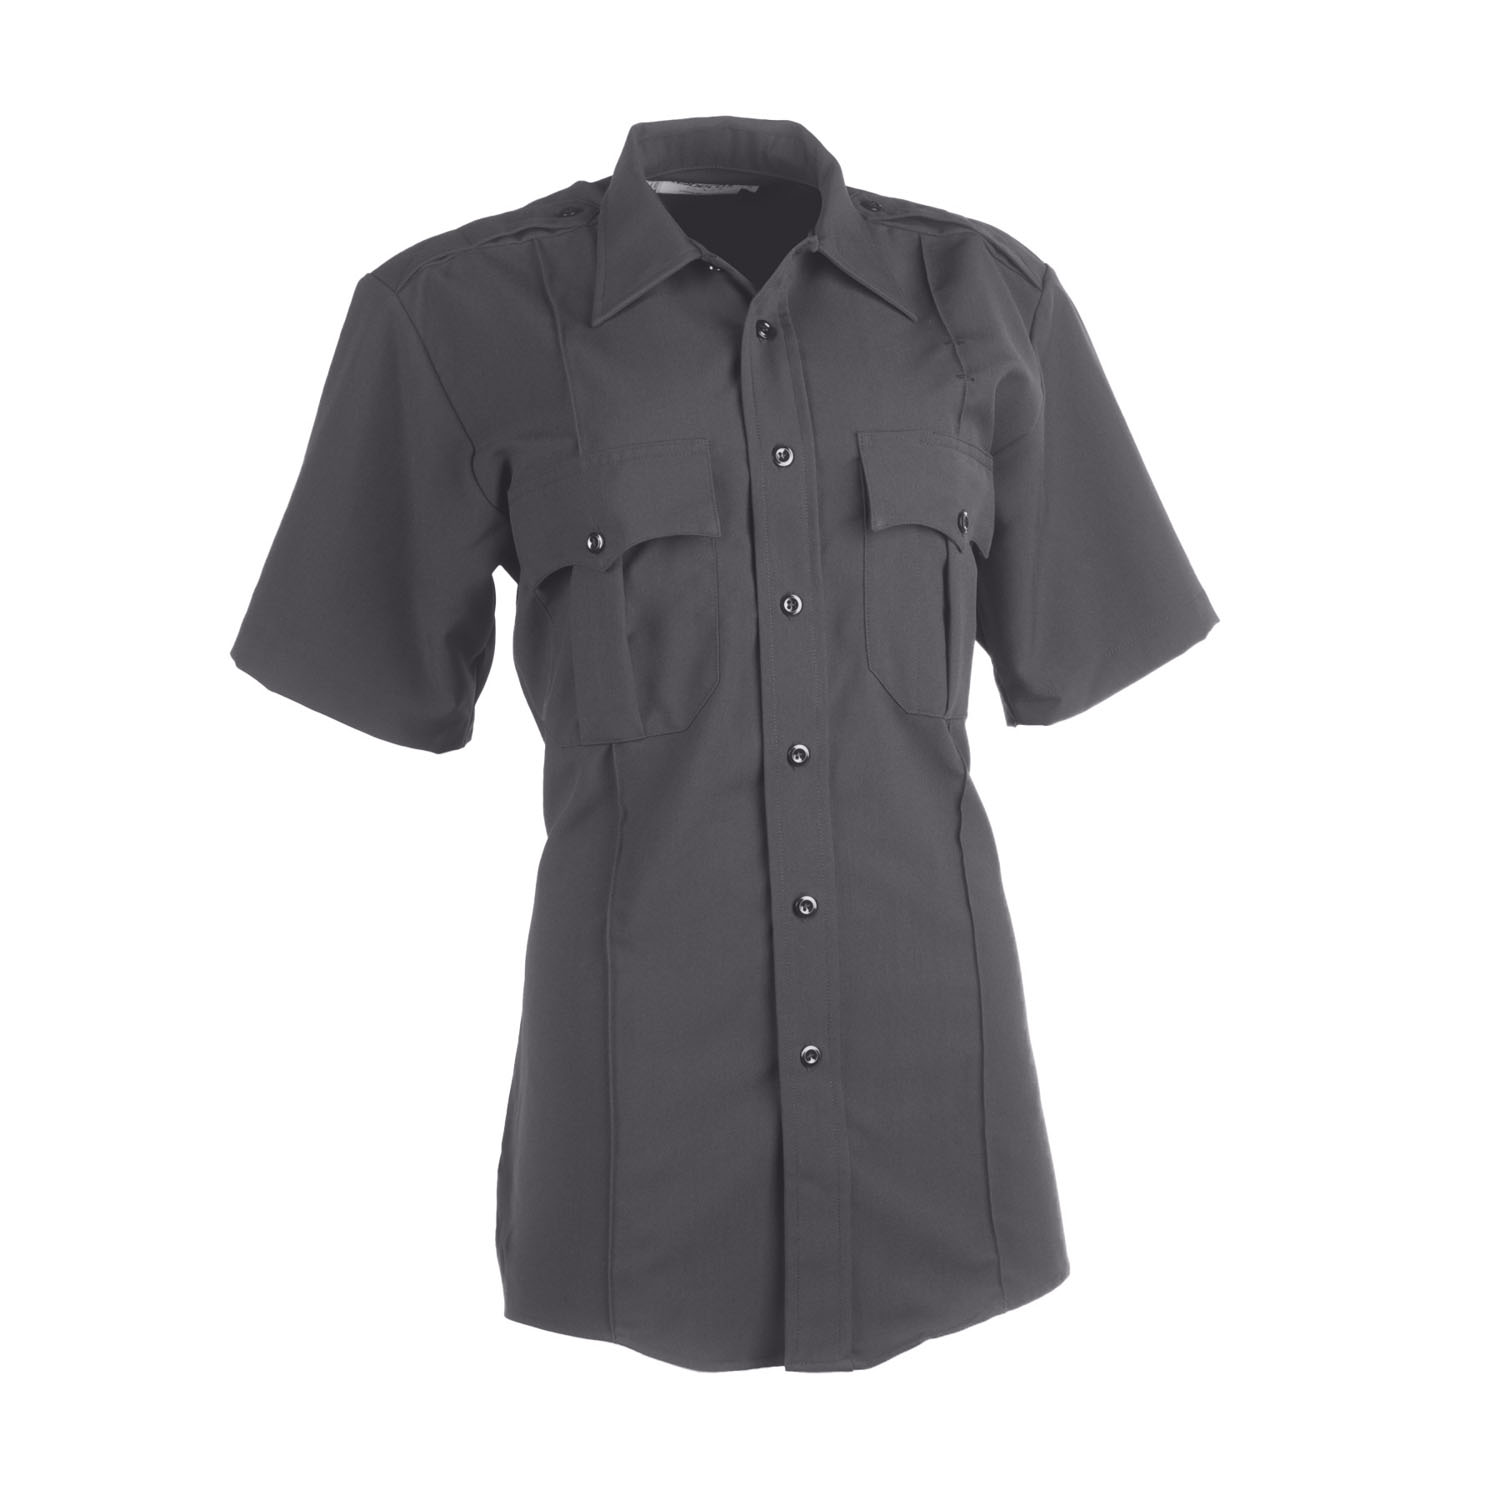 Postal Police - Navy Short Sleeve Shirt